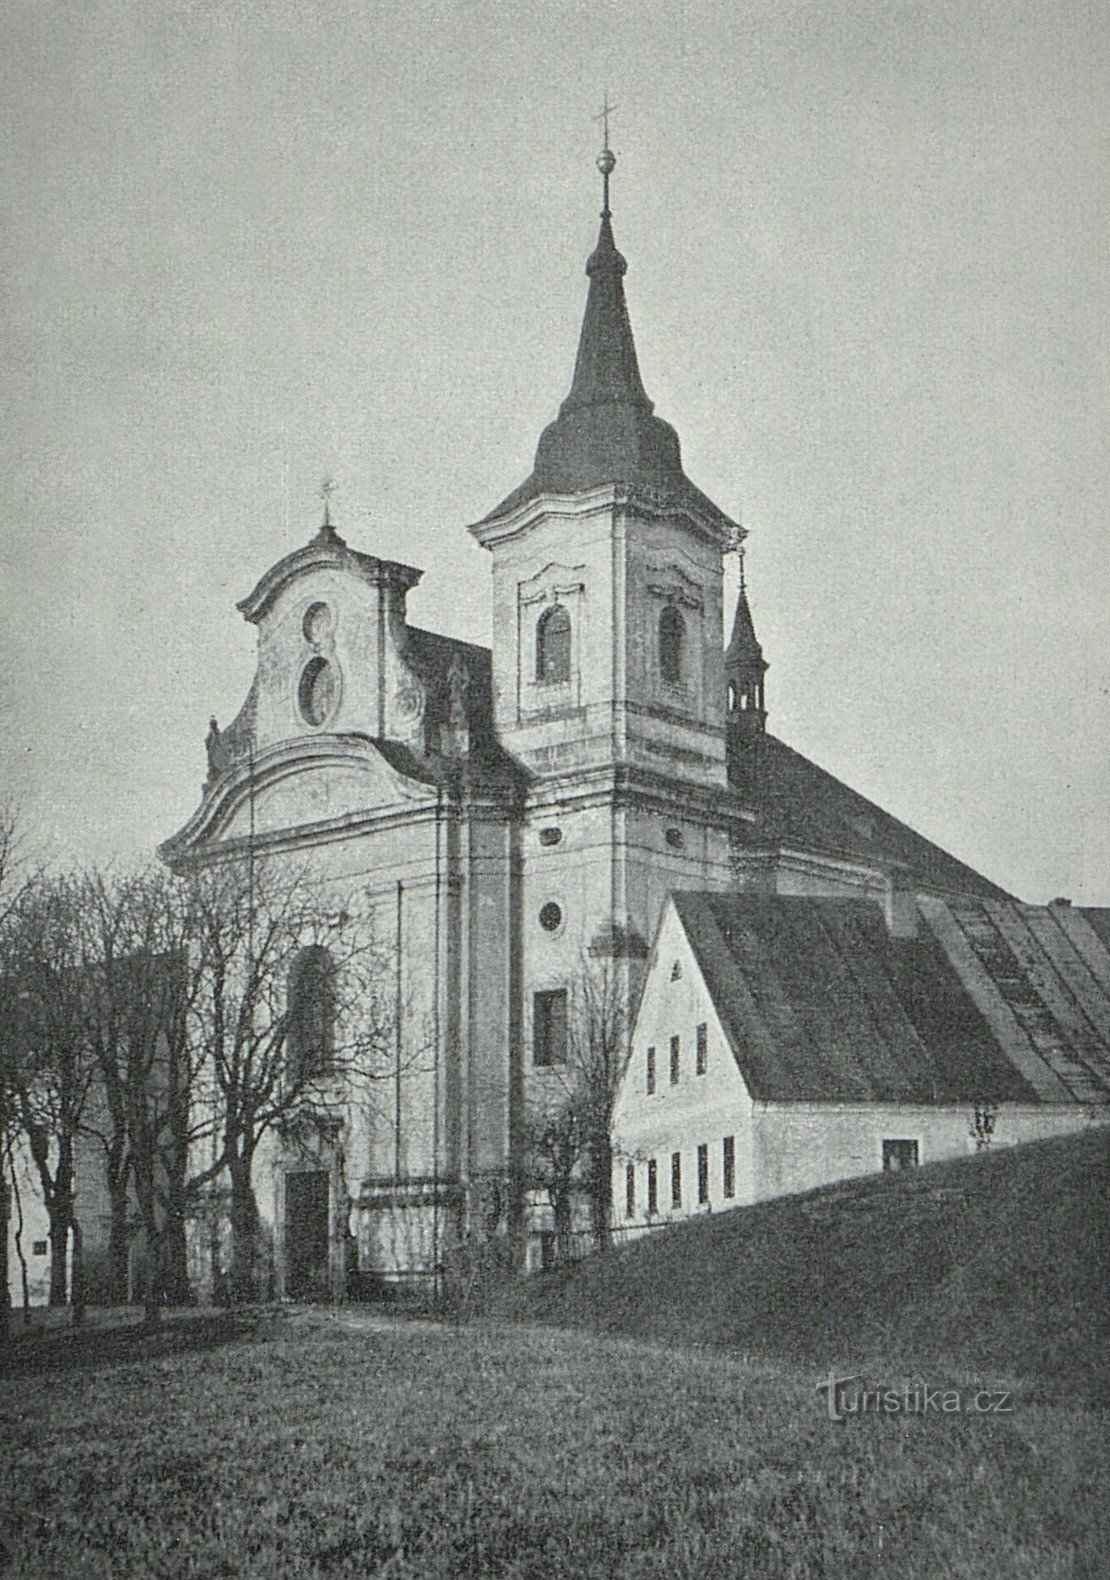 The monastery church in Nové Paca before 1909